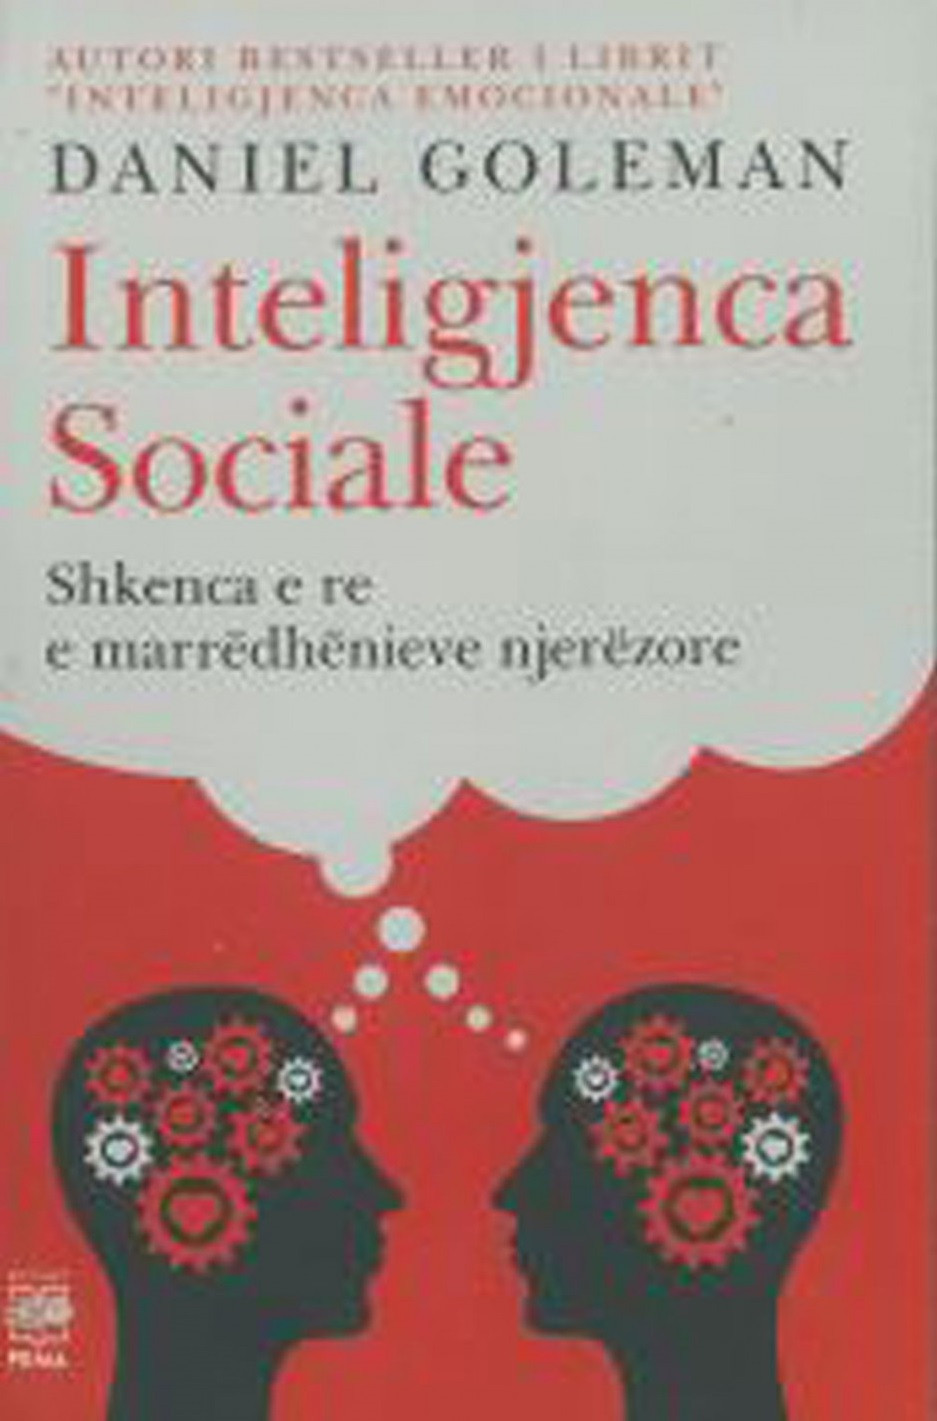 Inteligjenca sociale